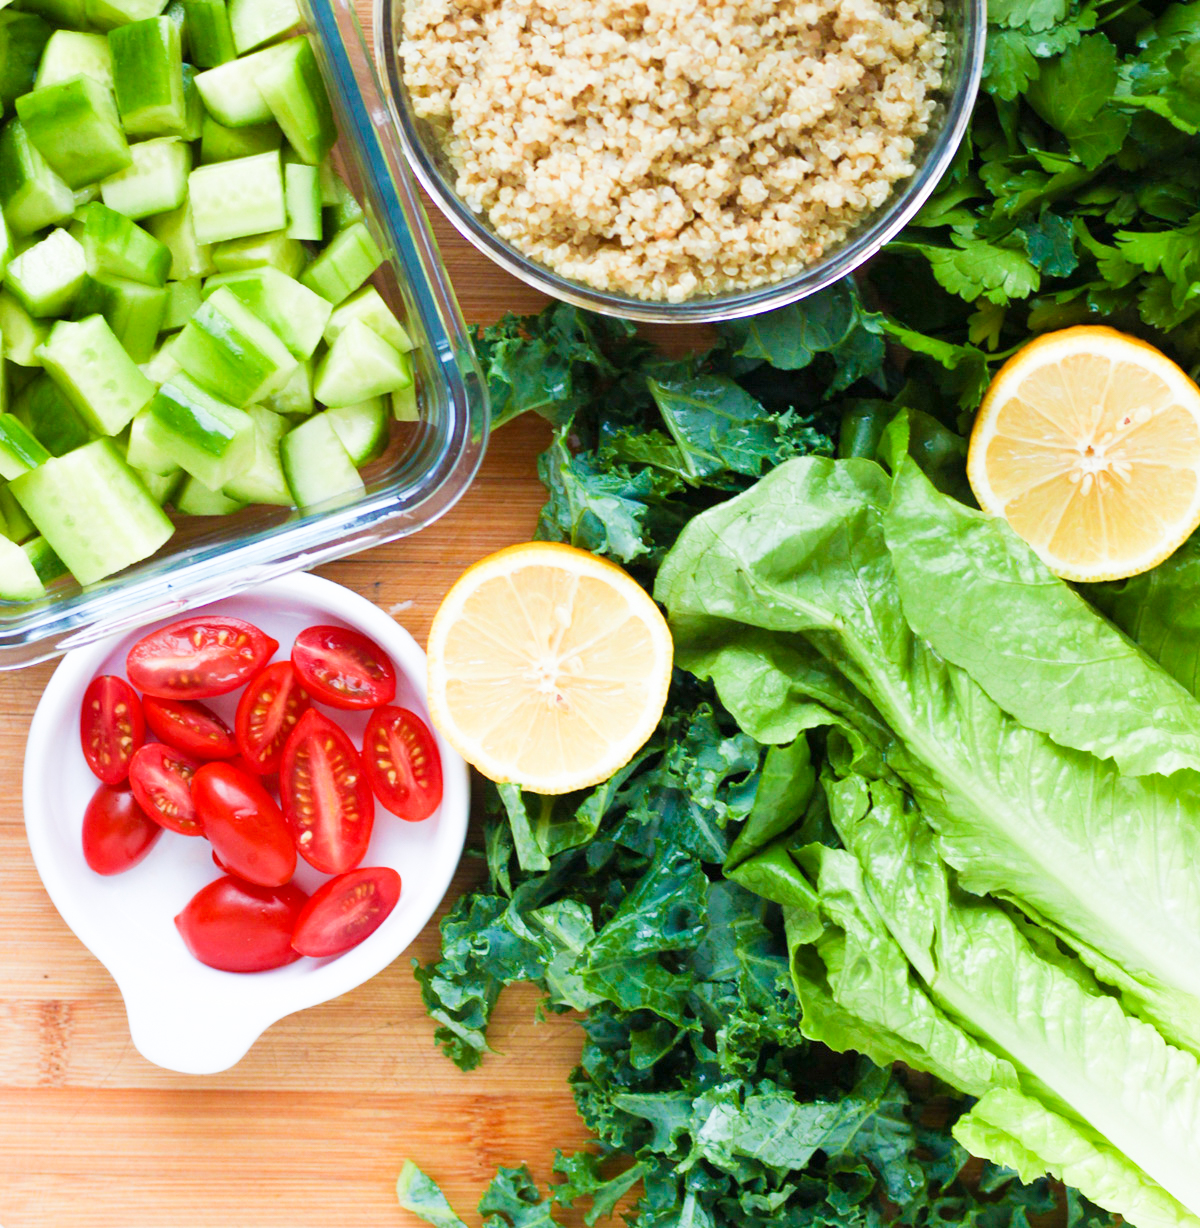 Ingredients for Kale Caesar salad.